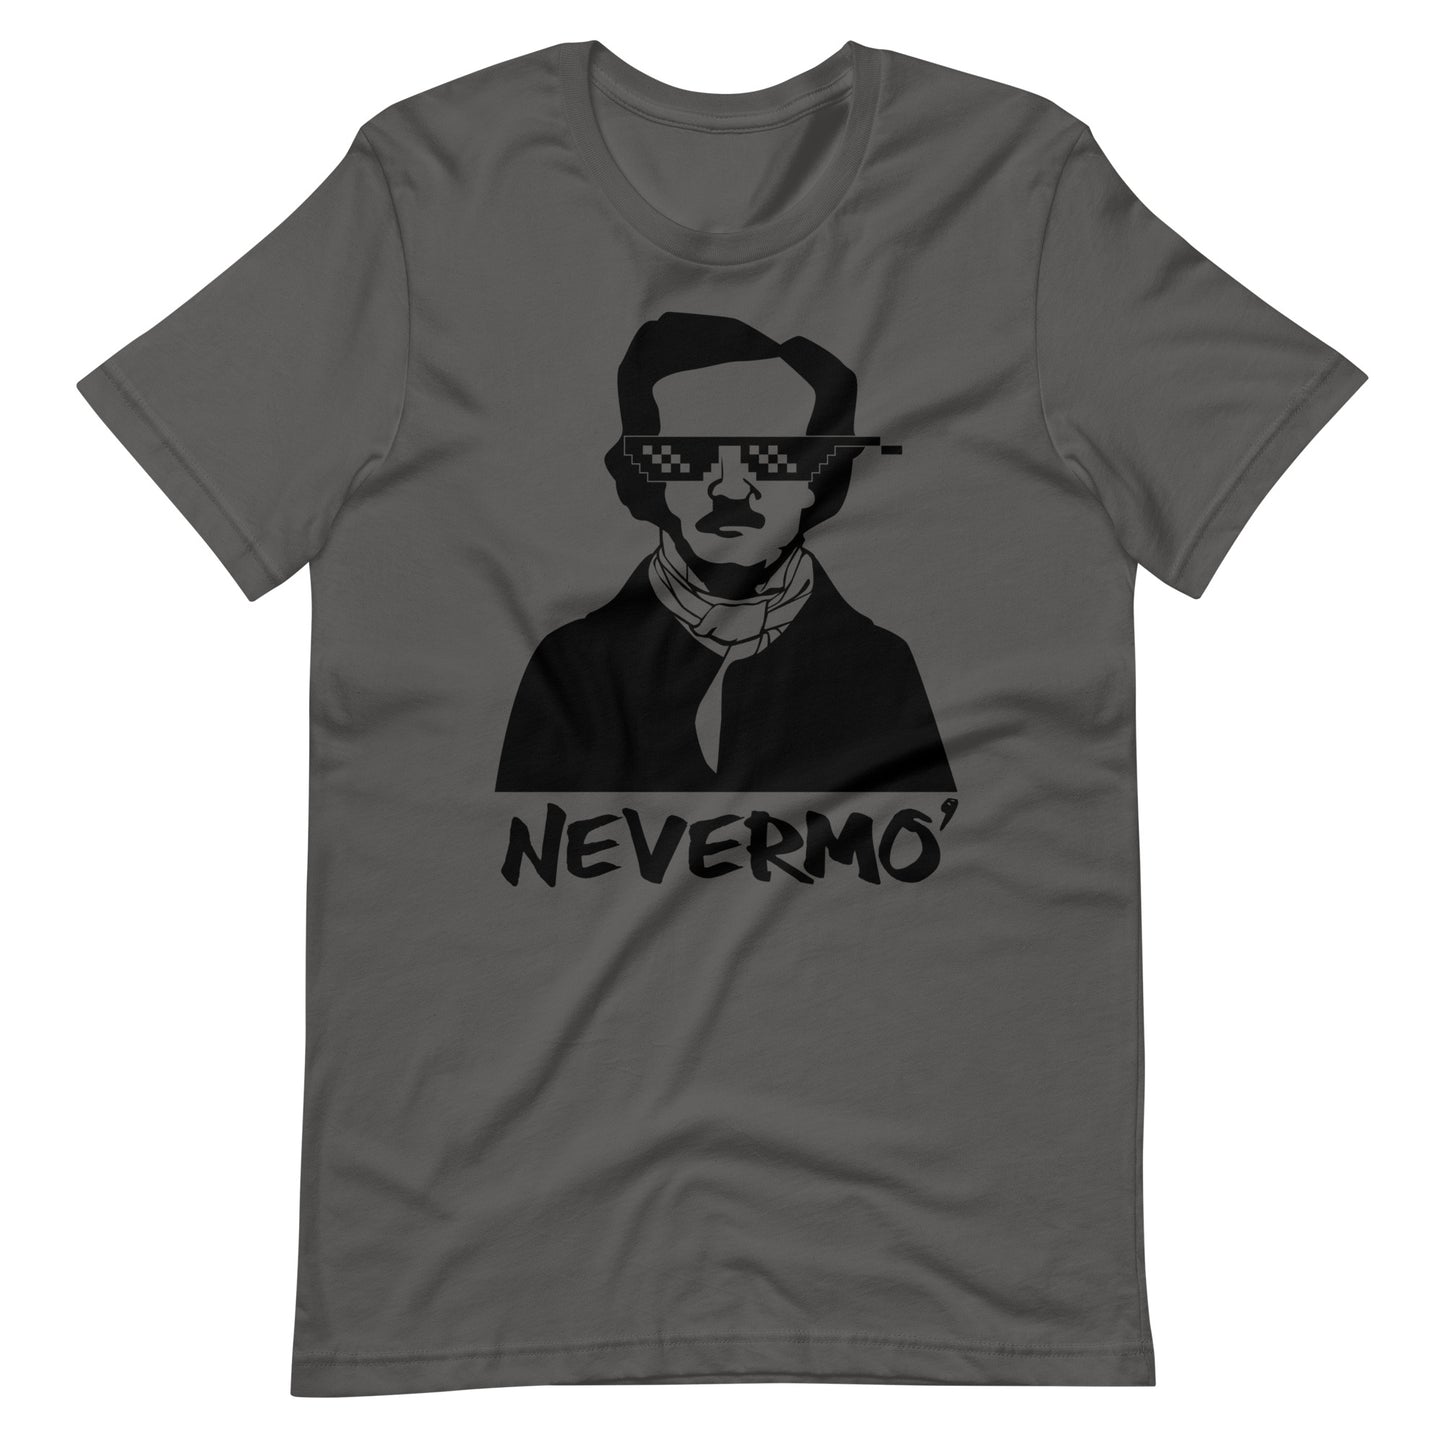 Men's Edgar Allan Poe "The Nevermo" T-Shirt - Asphalt Front